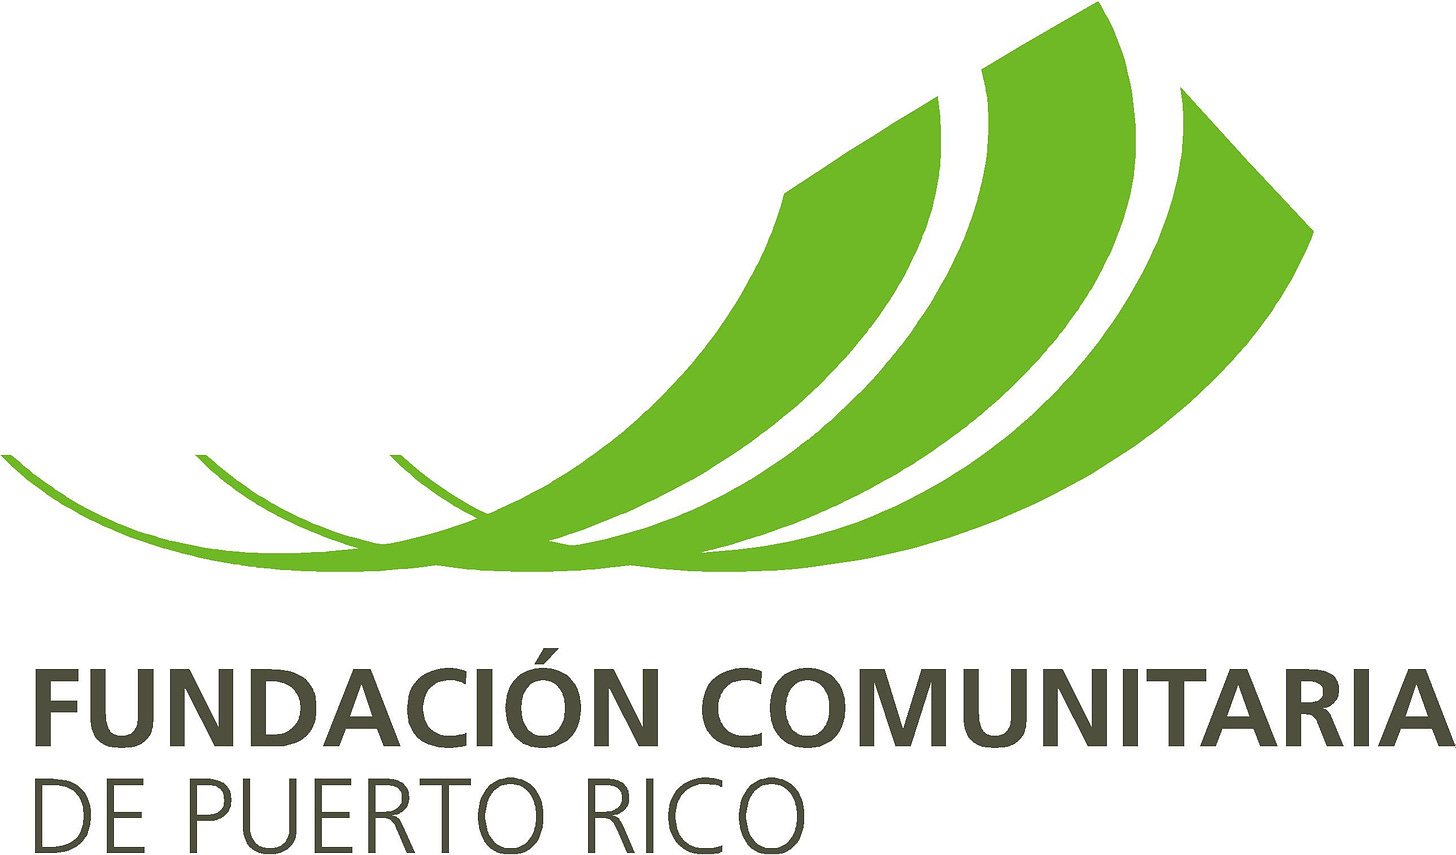 PUERTO RICO COMMUNITY FOUNDATION INC - GuideStar Profile